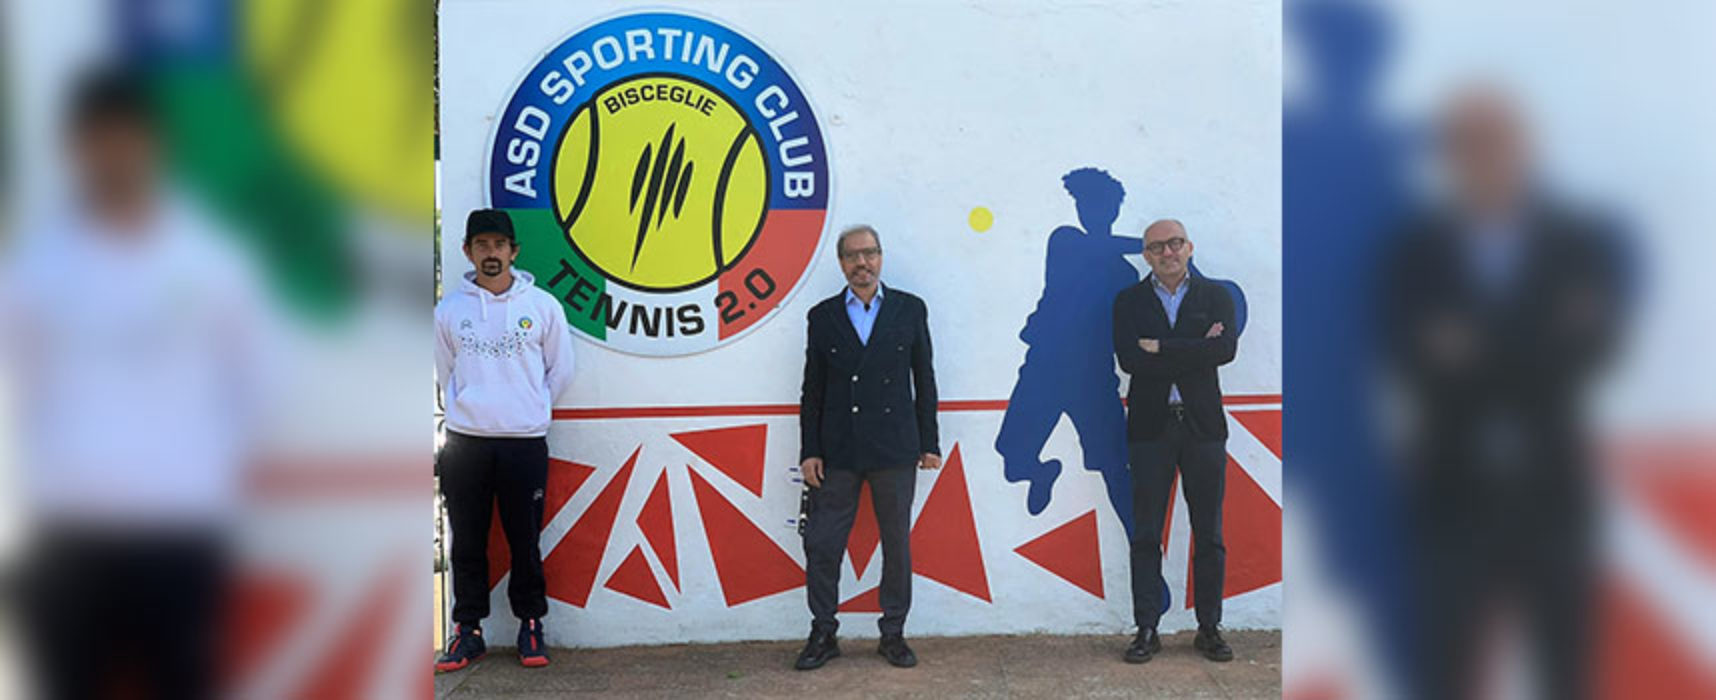 Sporting Club Tennis Bisceglie 2.0 ottiene finanziamento regionale per restyling struttura